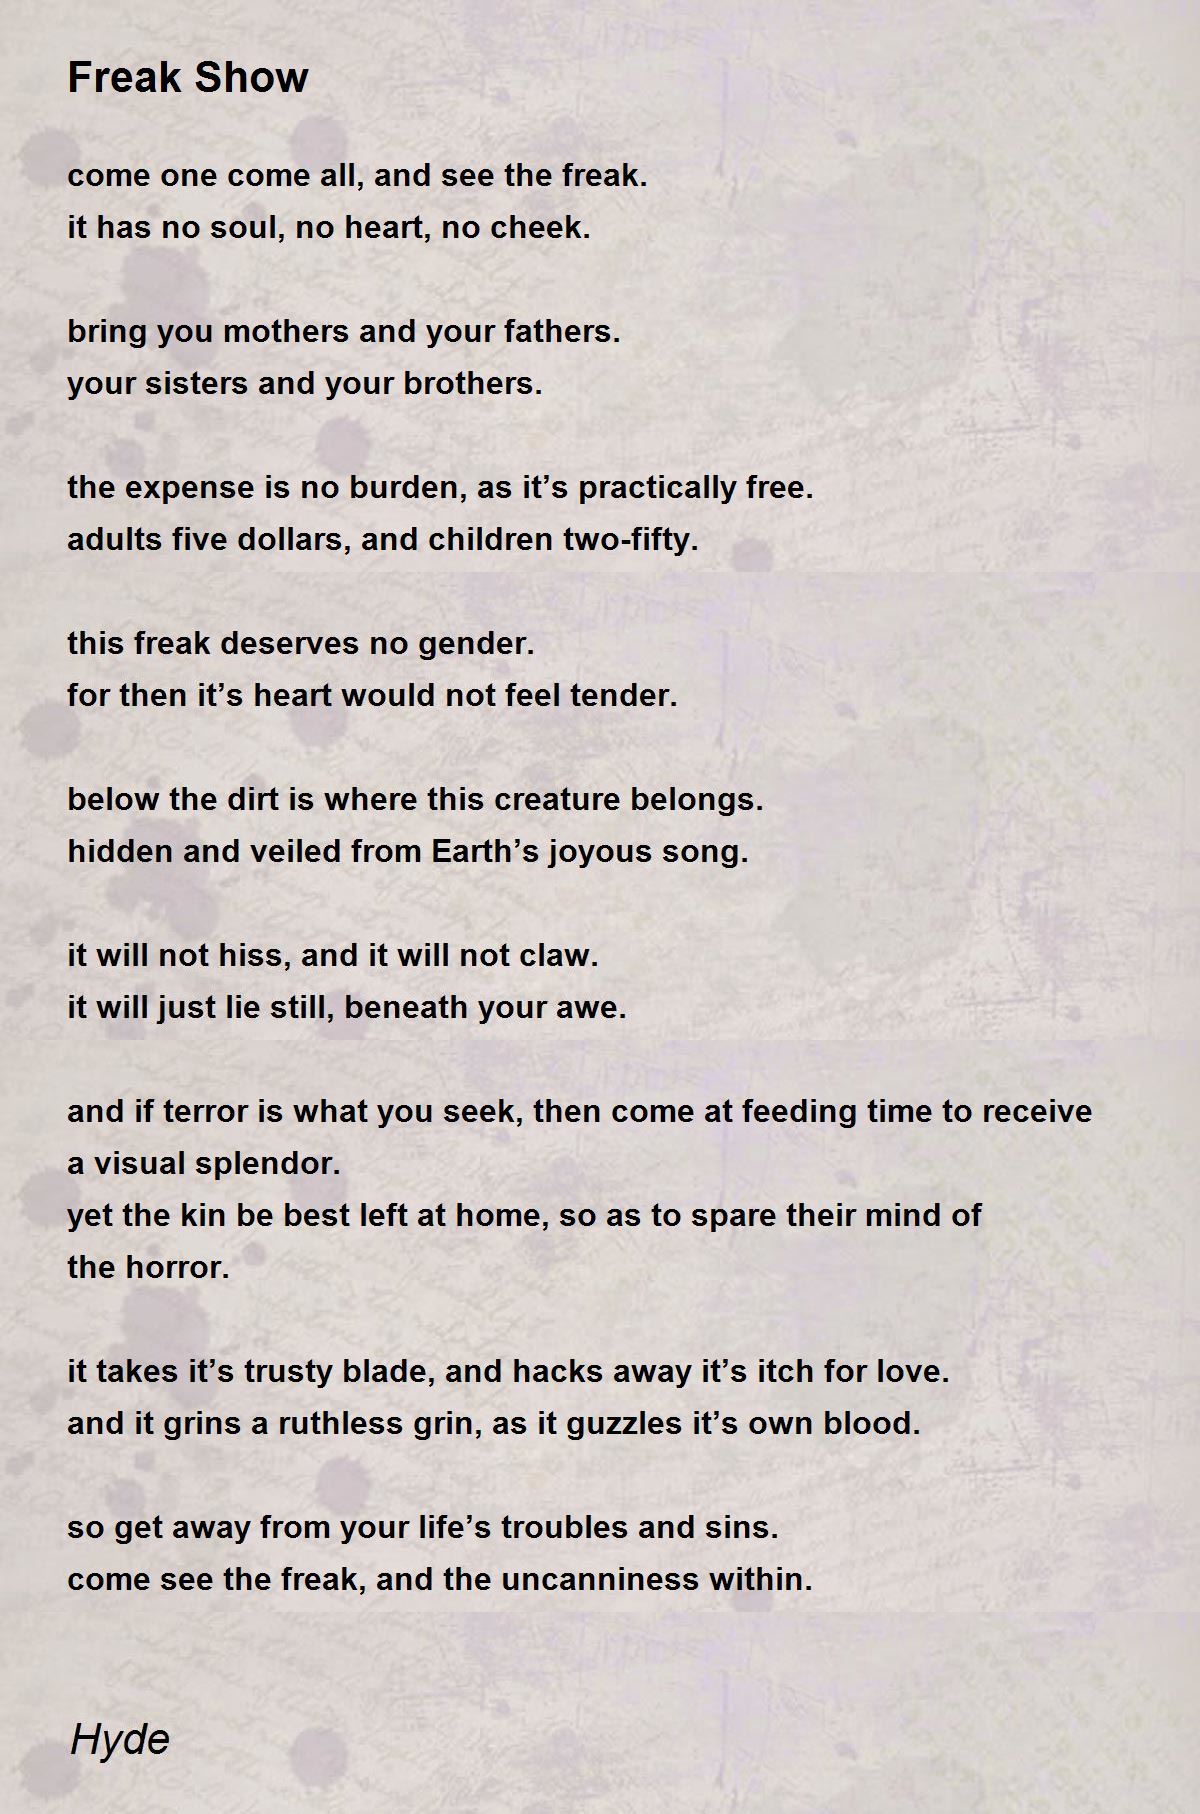 Freak Show Poem by Hyde - Poem Hunter